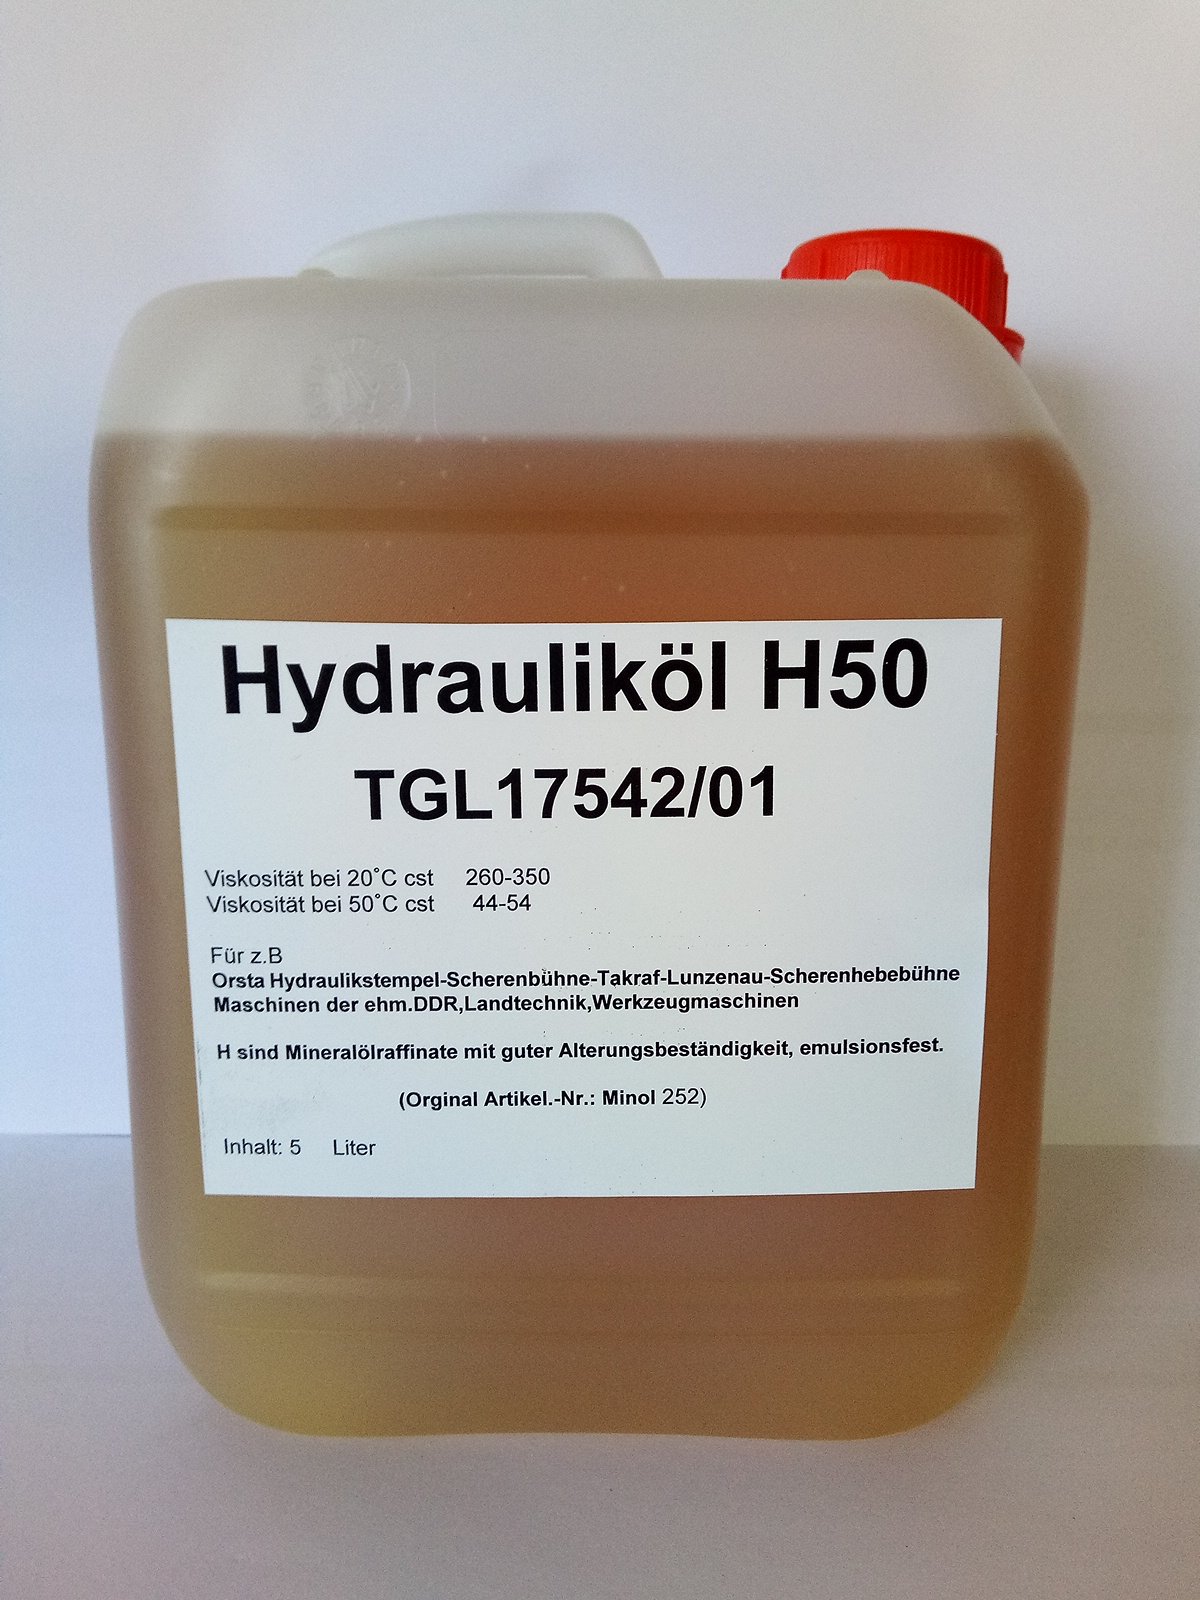 East Germany Oil Hydrauliköl H50